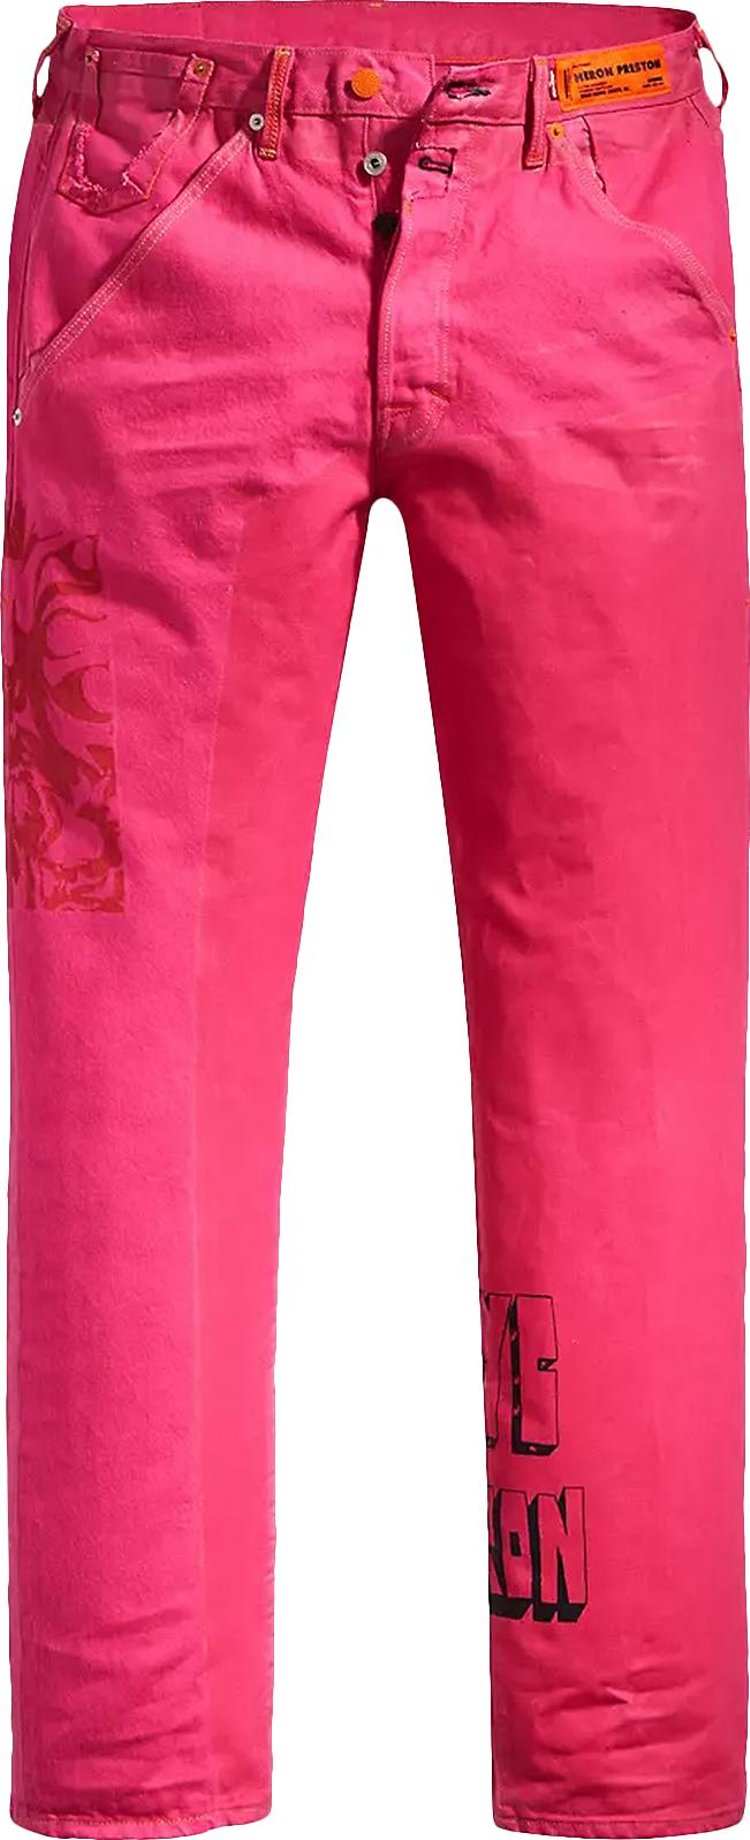 Heron Preston x Levi's 501 Original Fit Jeans 'Fuchsia Multicolor' | GOAT